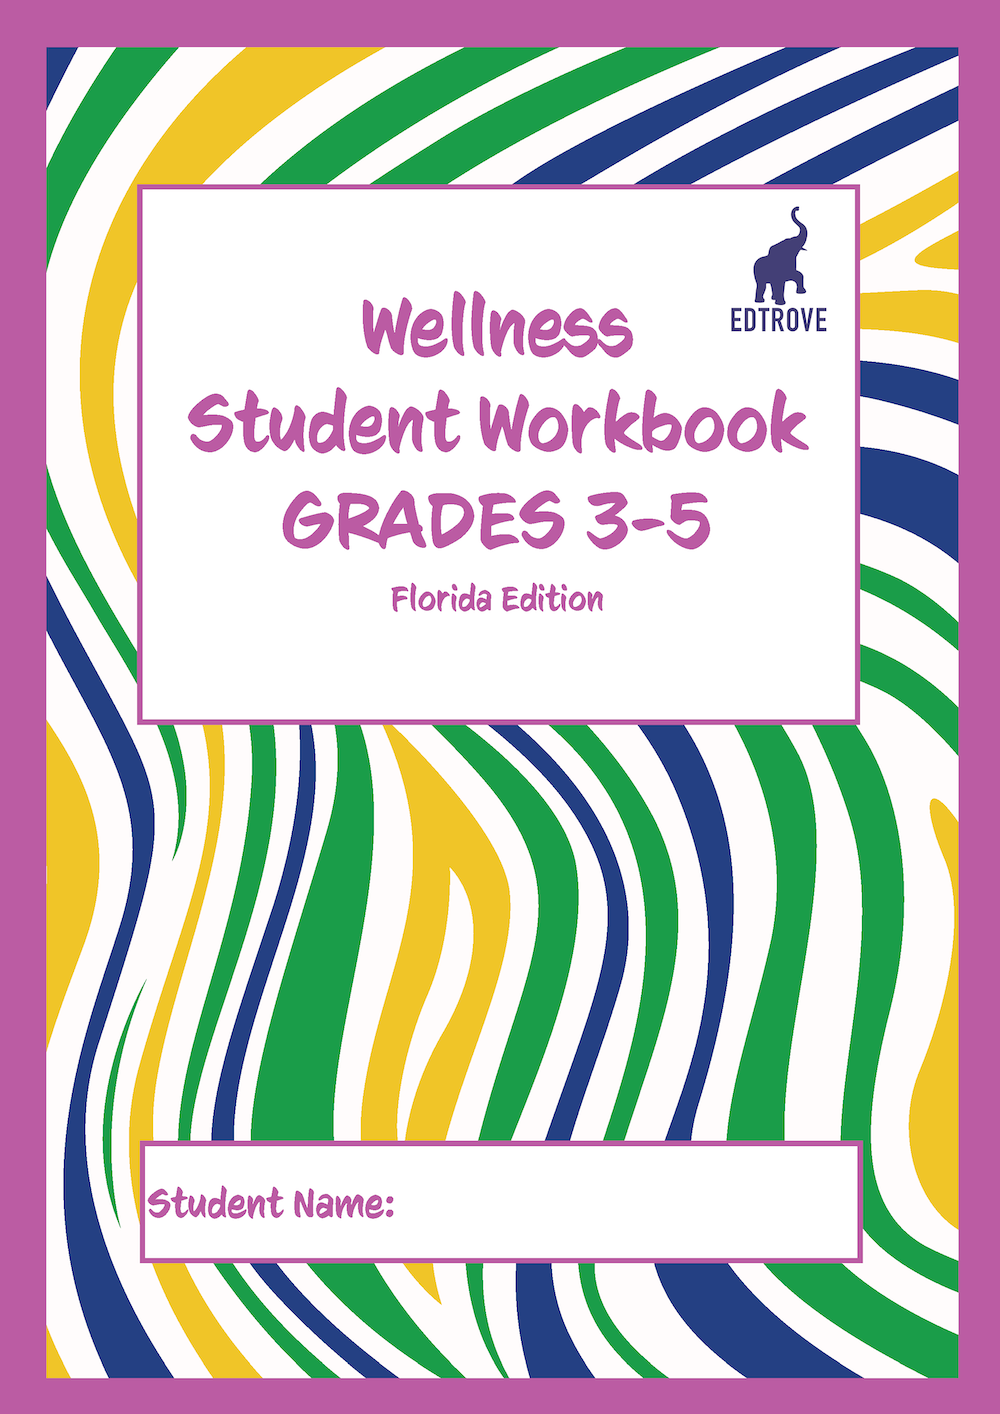 Wellness Student Workbook Grades 3-5 (Florida edition)